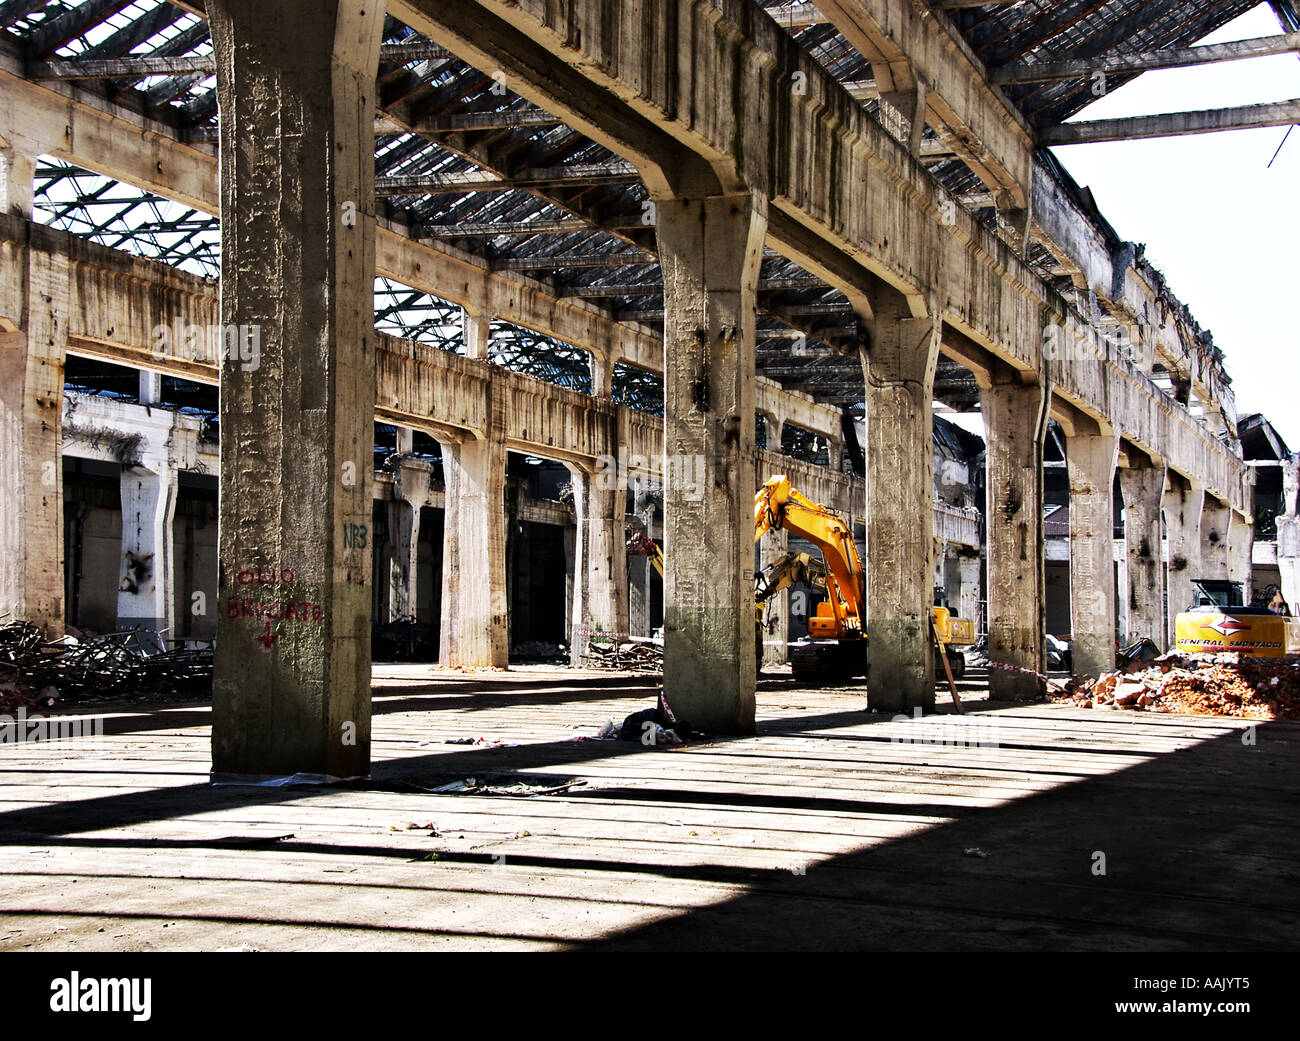 Milano Italia zona industriale bicocca Foto stock - Alamy